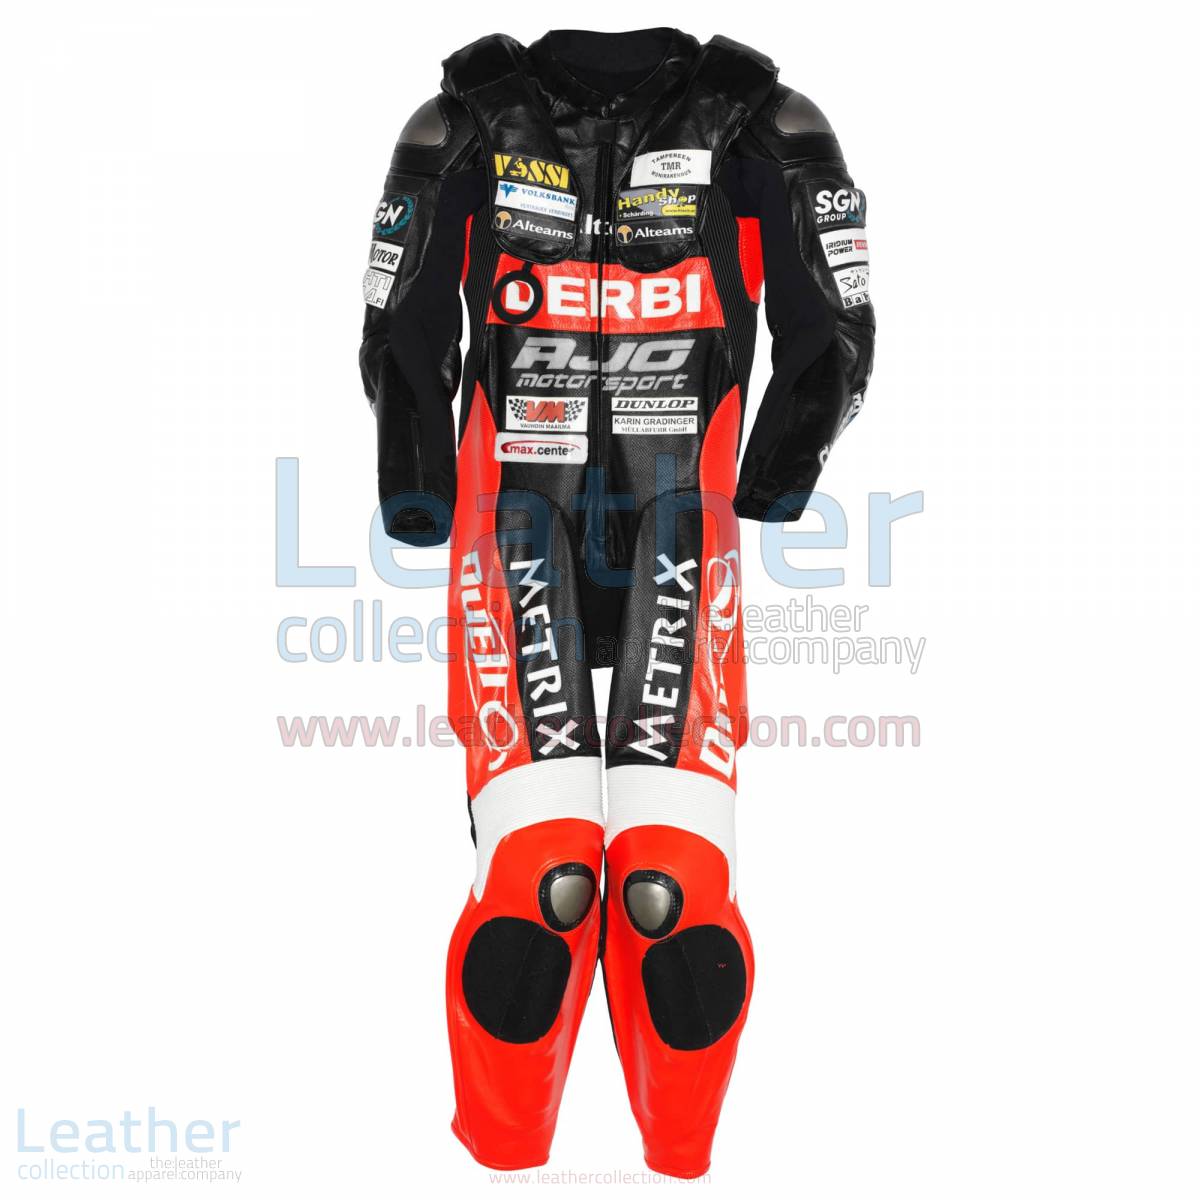 Michi Ranseder Debri GP 2007 Motorbike Suit – Debri Suit